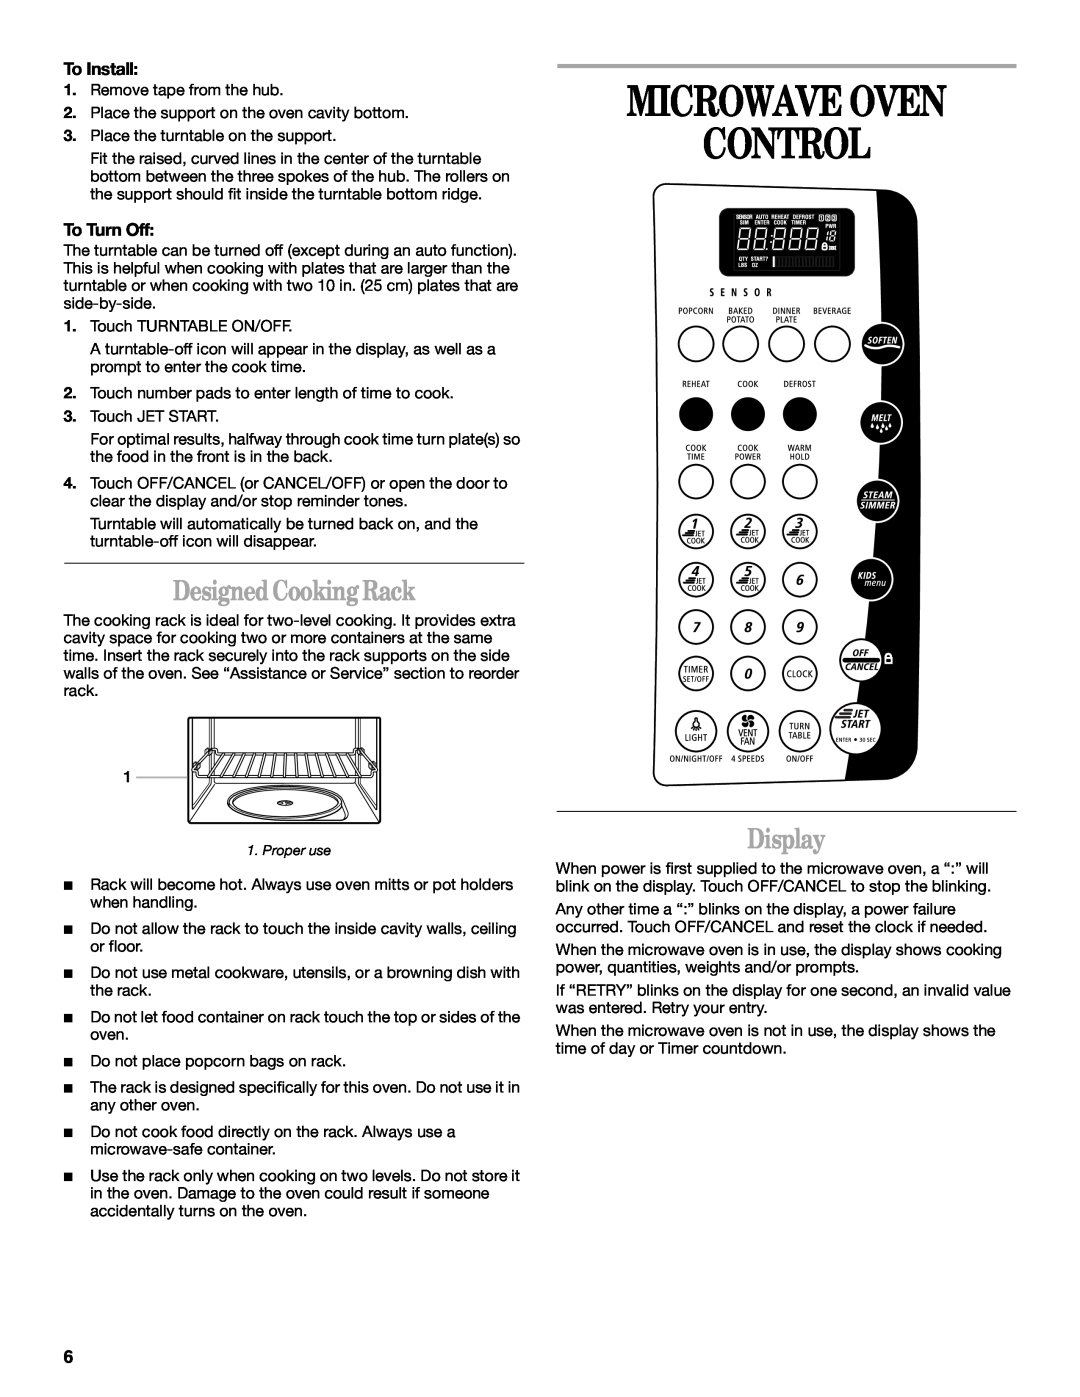 Whirlpool GH9185XL manual Microwave Oven Control, DesignedCooking Rack, Display 